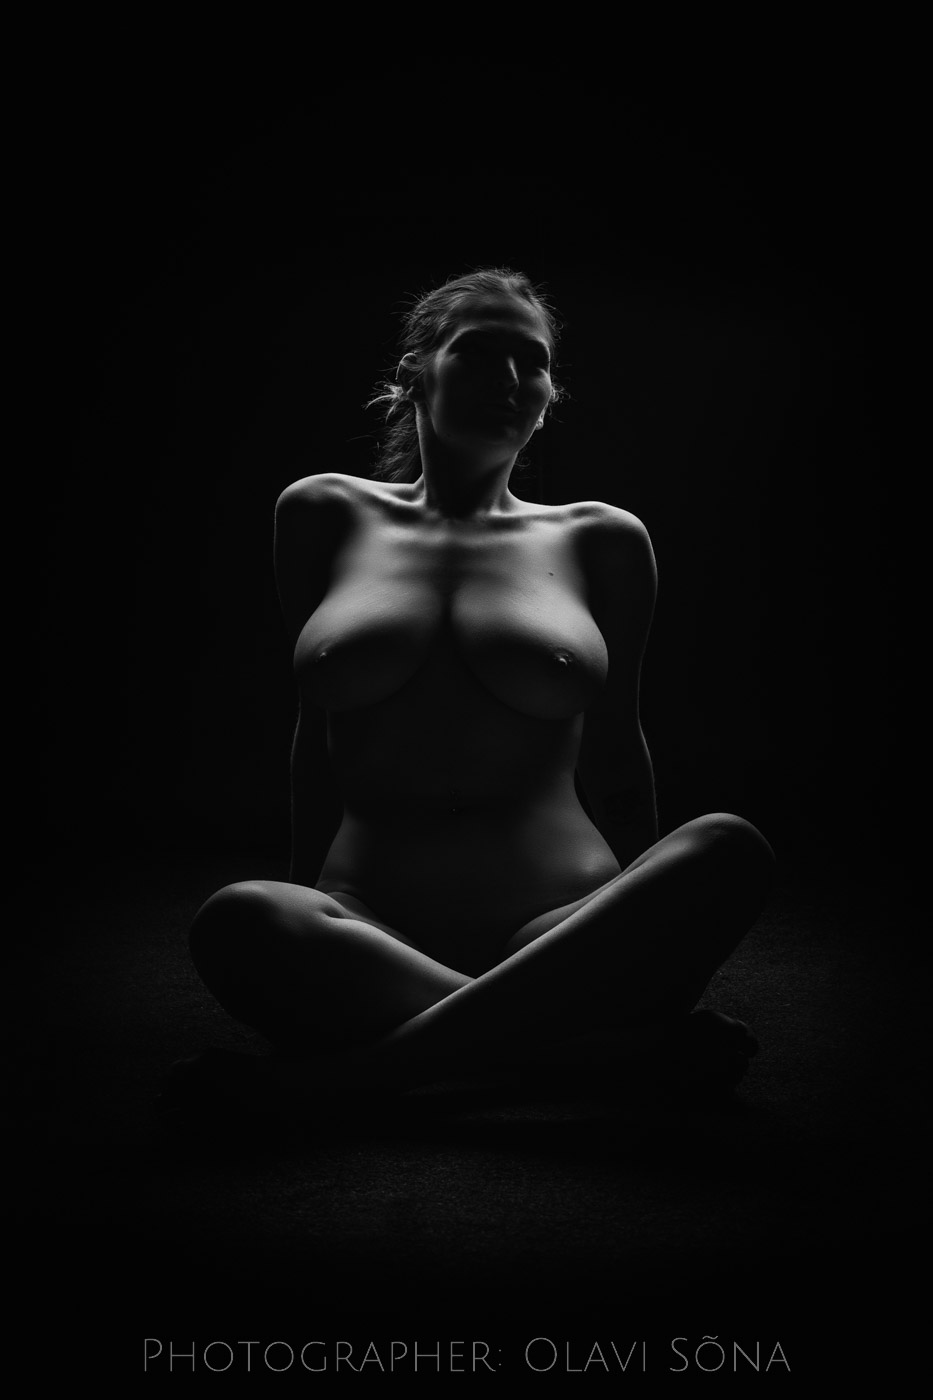 Nude Art Photography